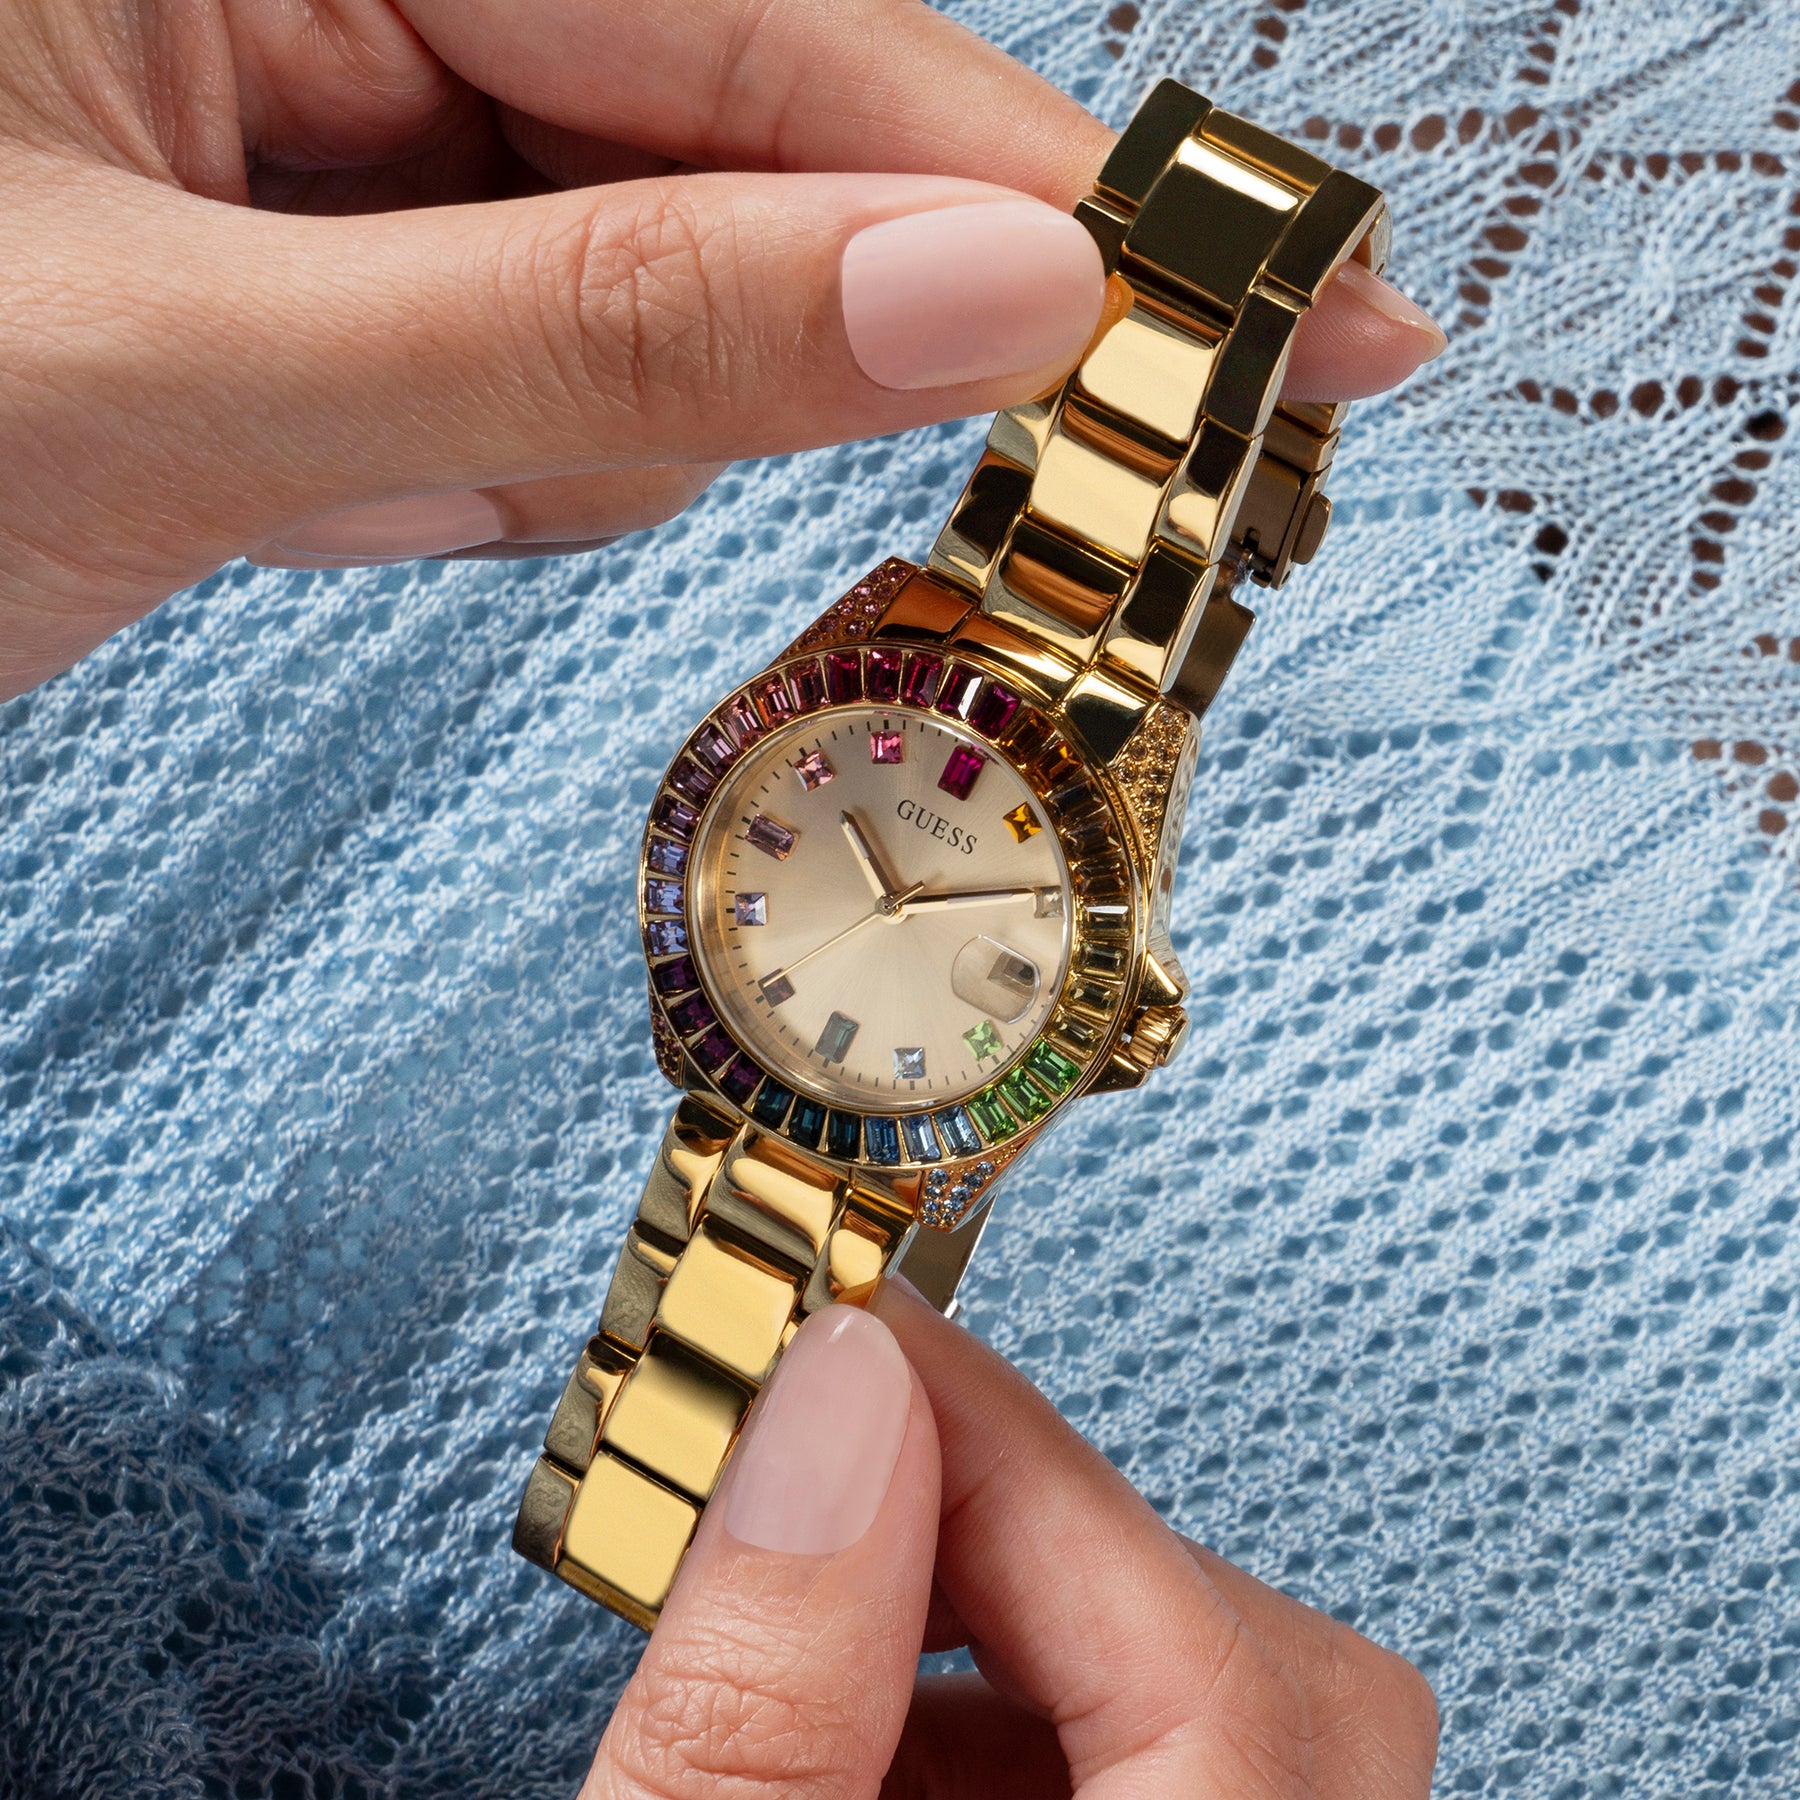 Guess Women's 34mm Opaline Multi Crystal Quartz Watch GW0475L3